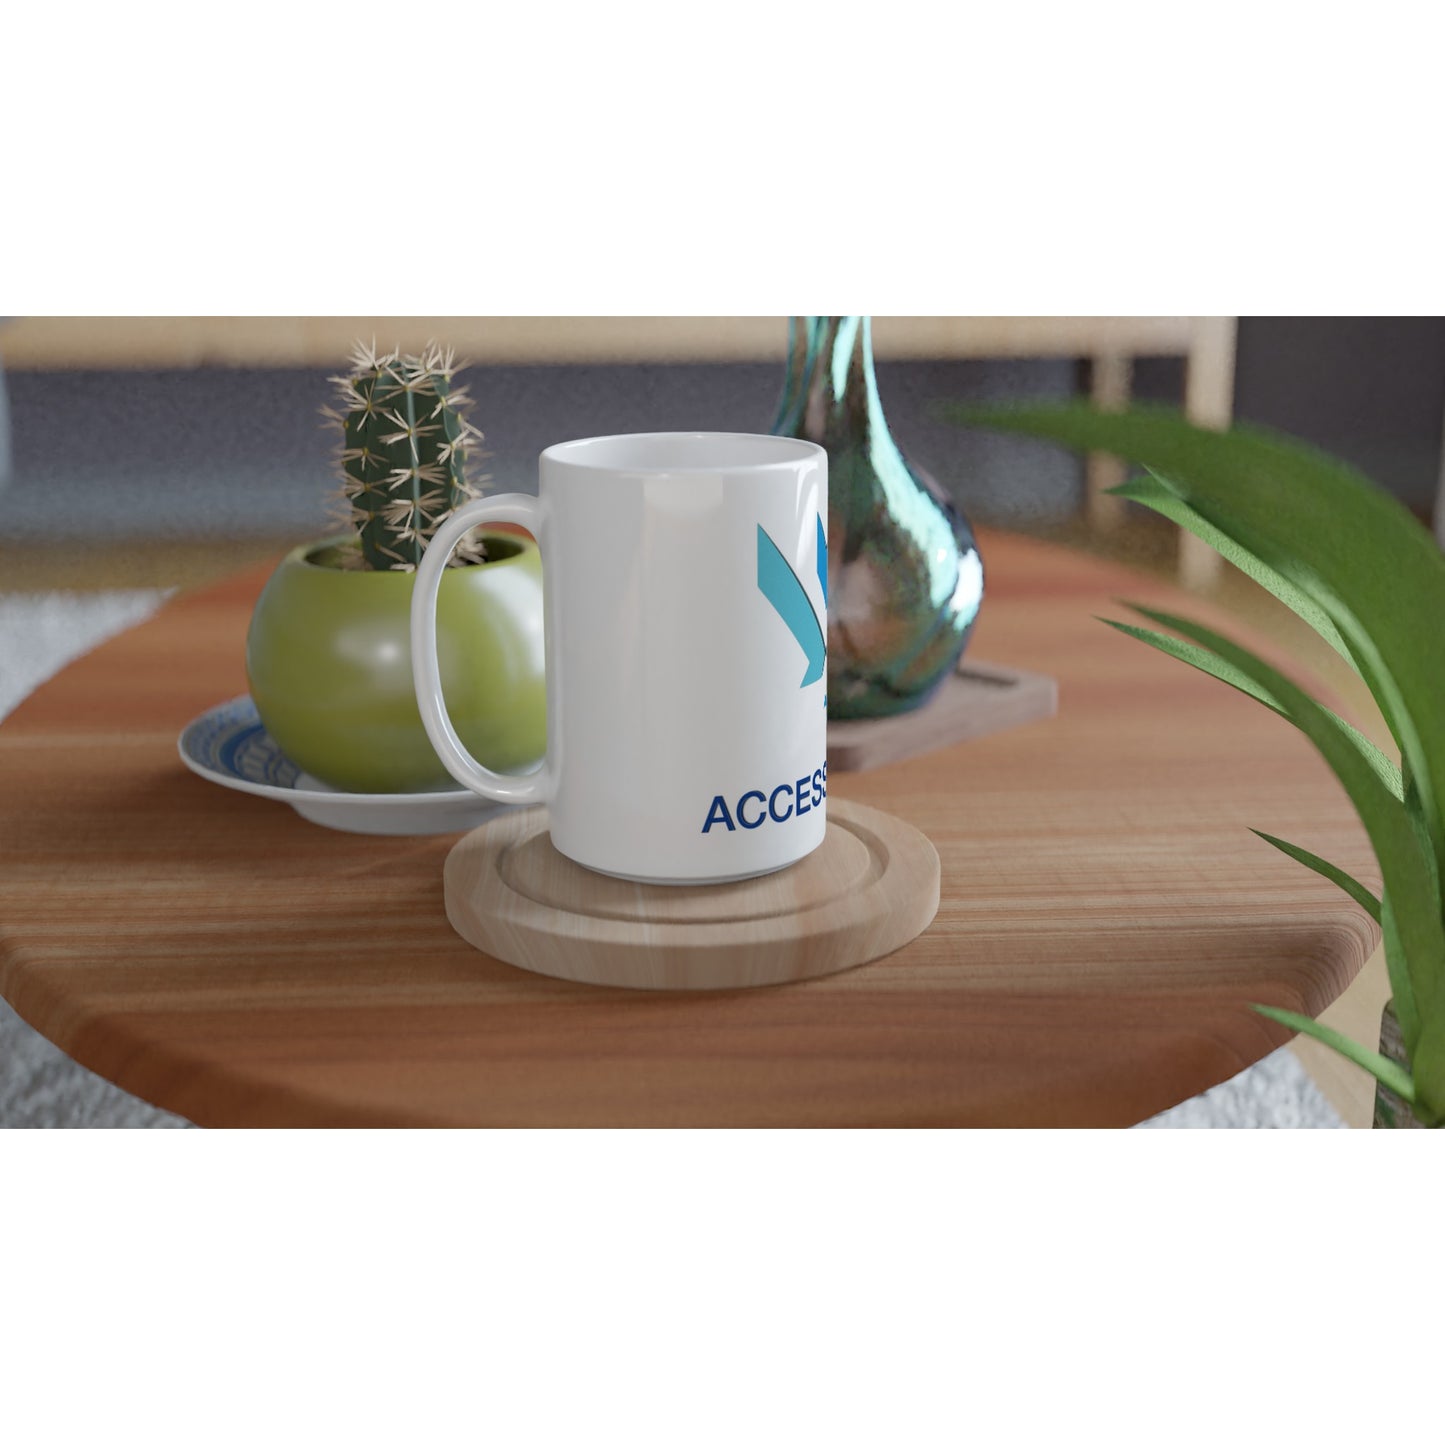 Access Church - White 15oz Ceramic Mug